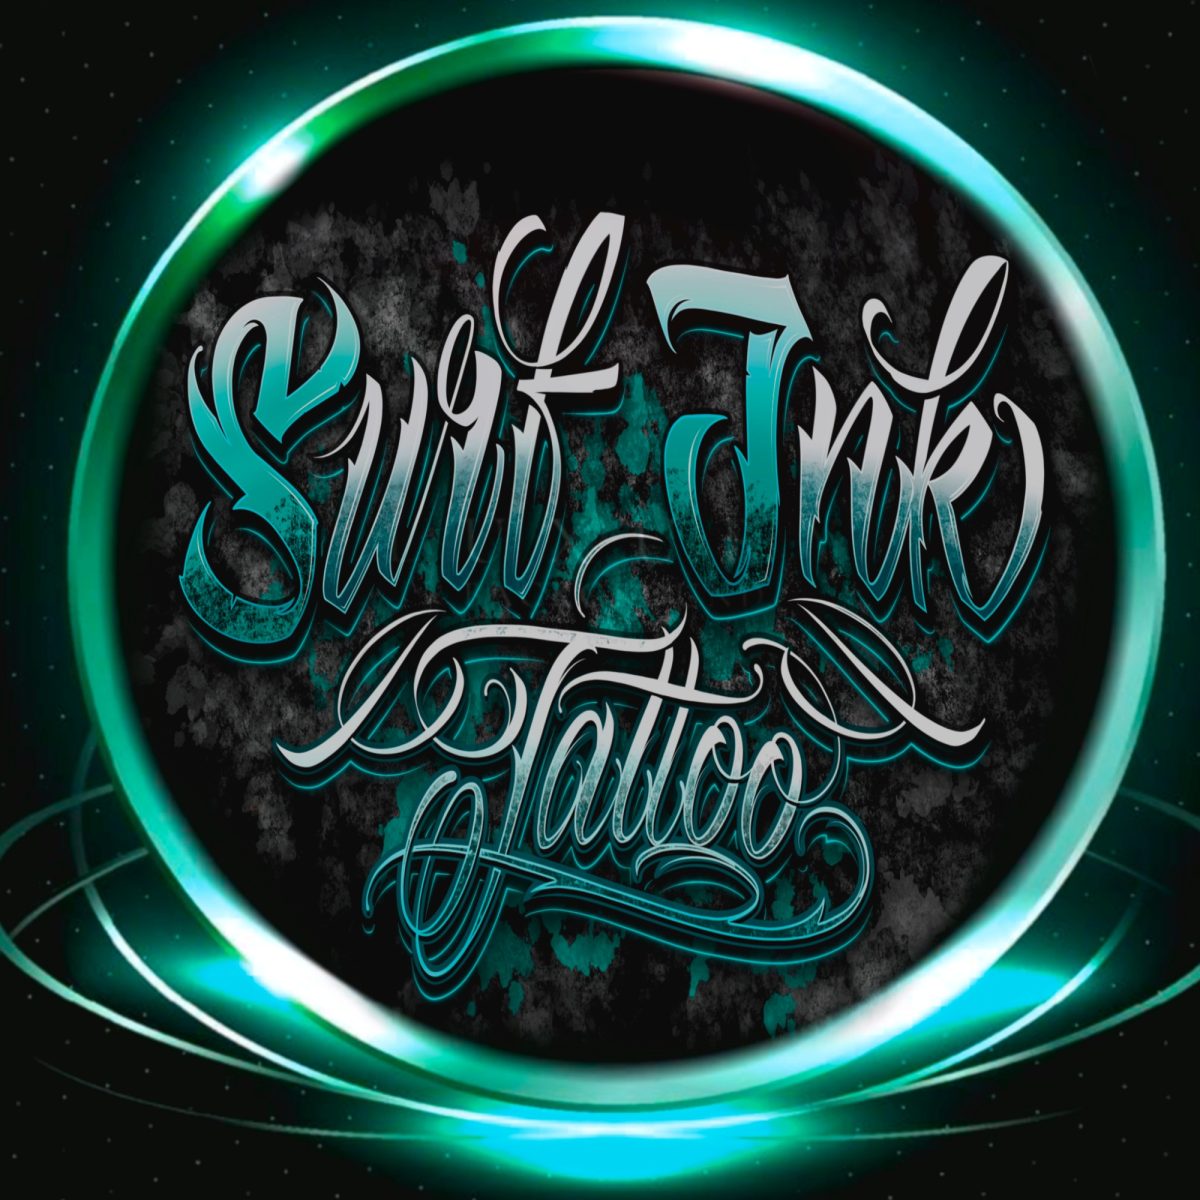 (c) Surf-ink-tattoo.de